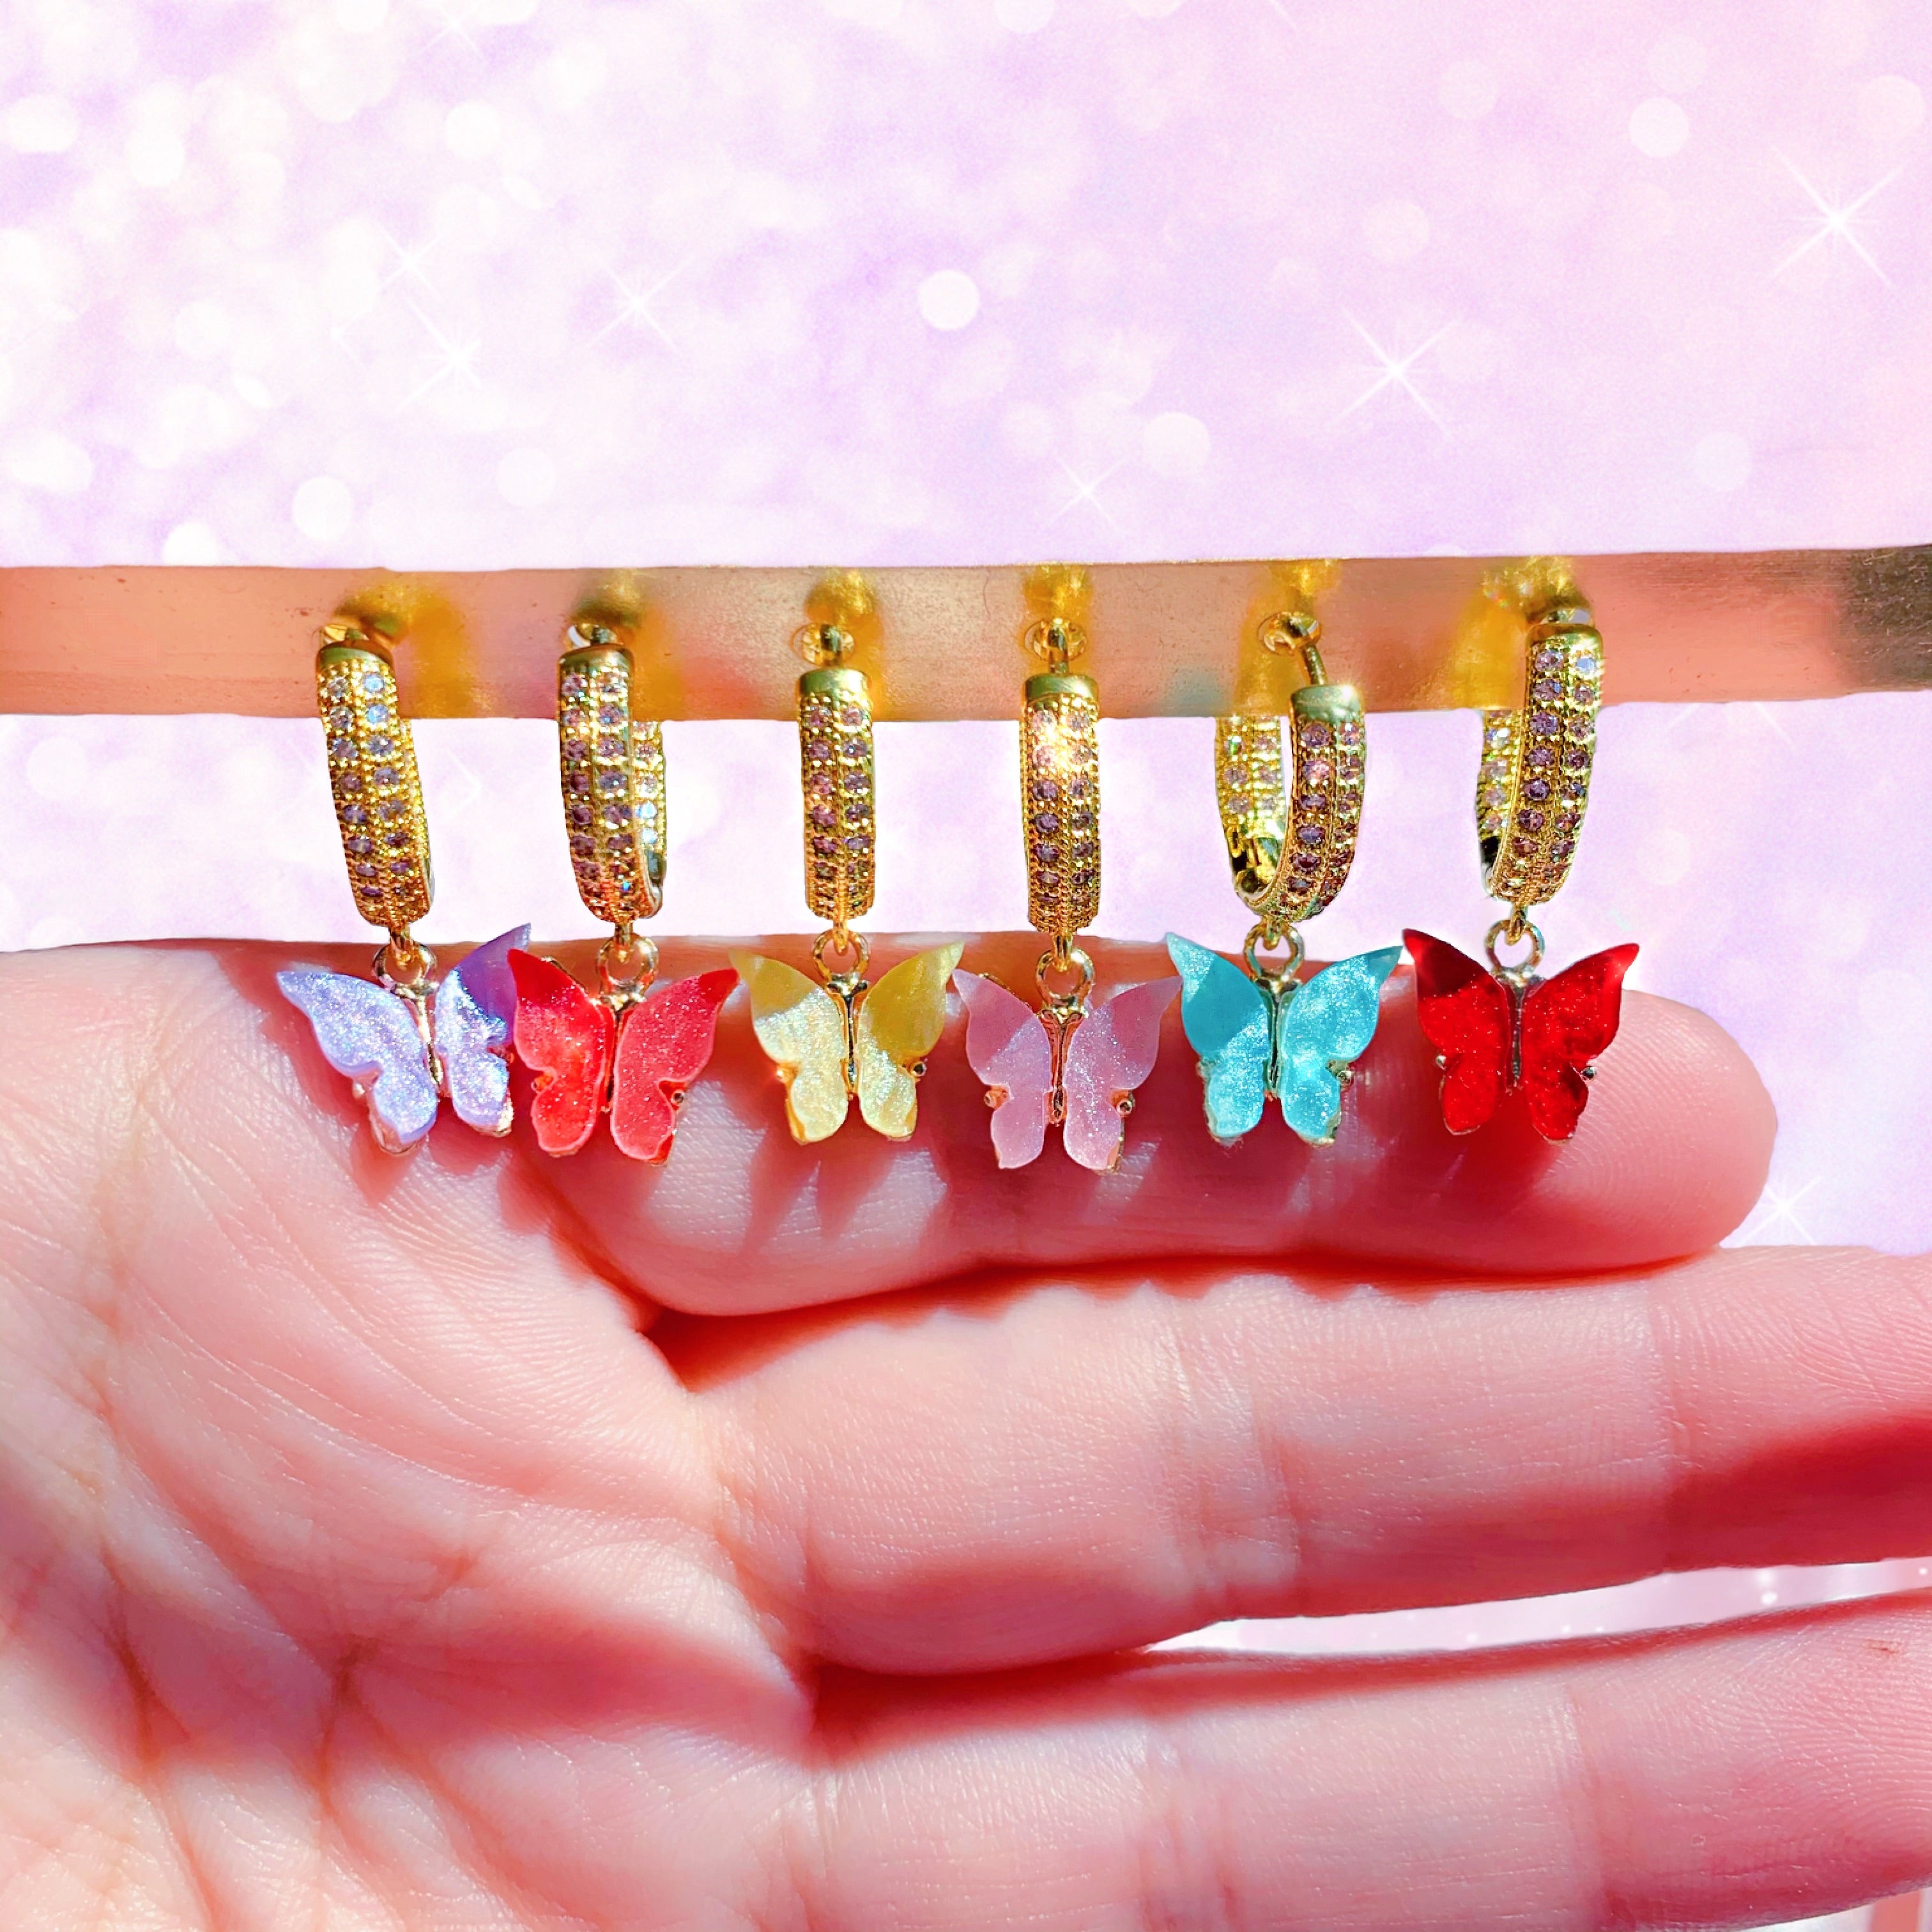 Coral Fly Earrings (4490100834370)